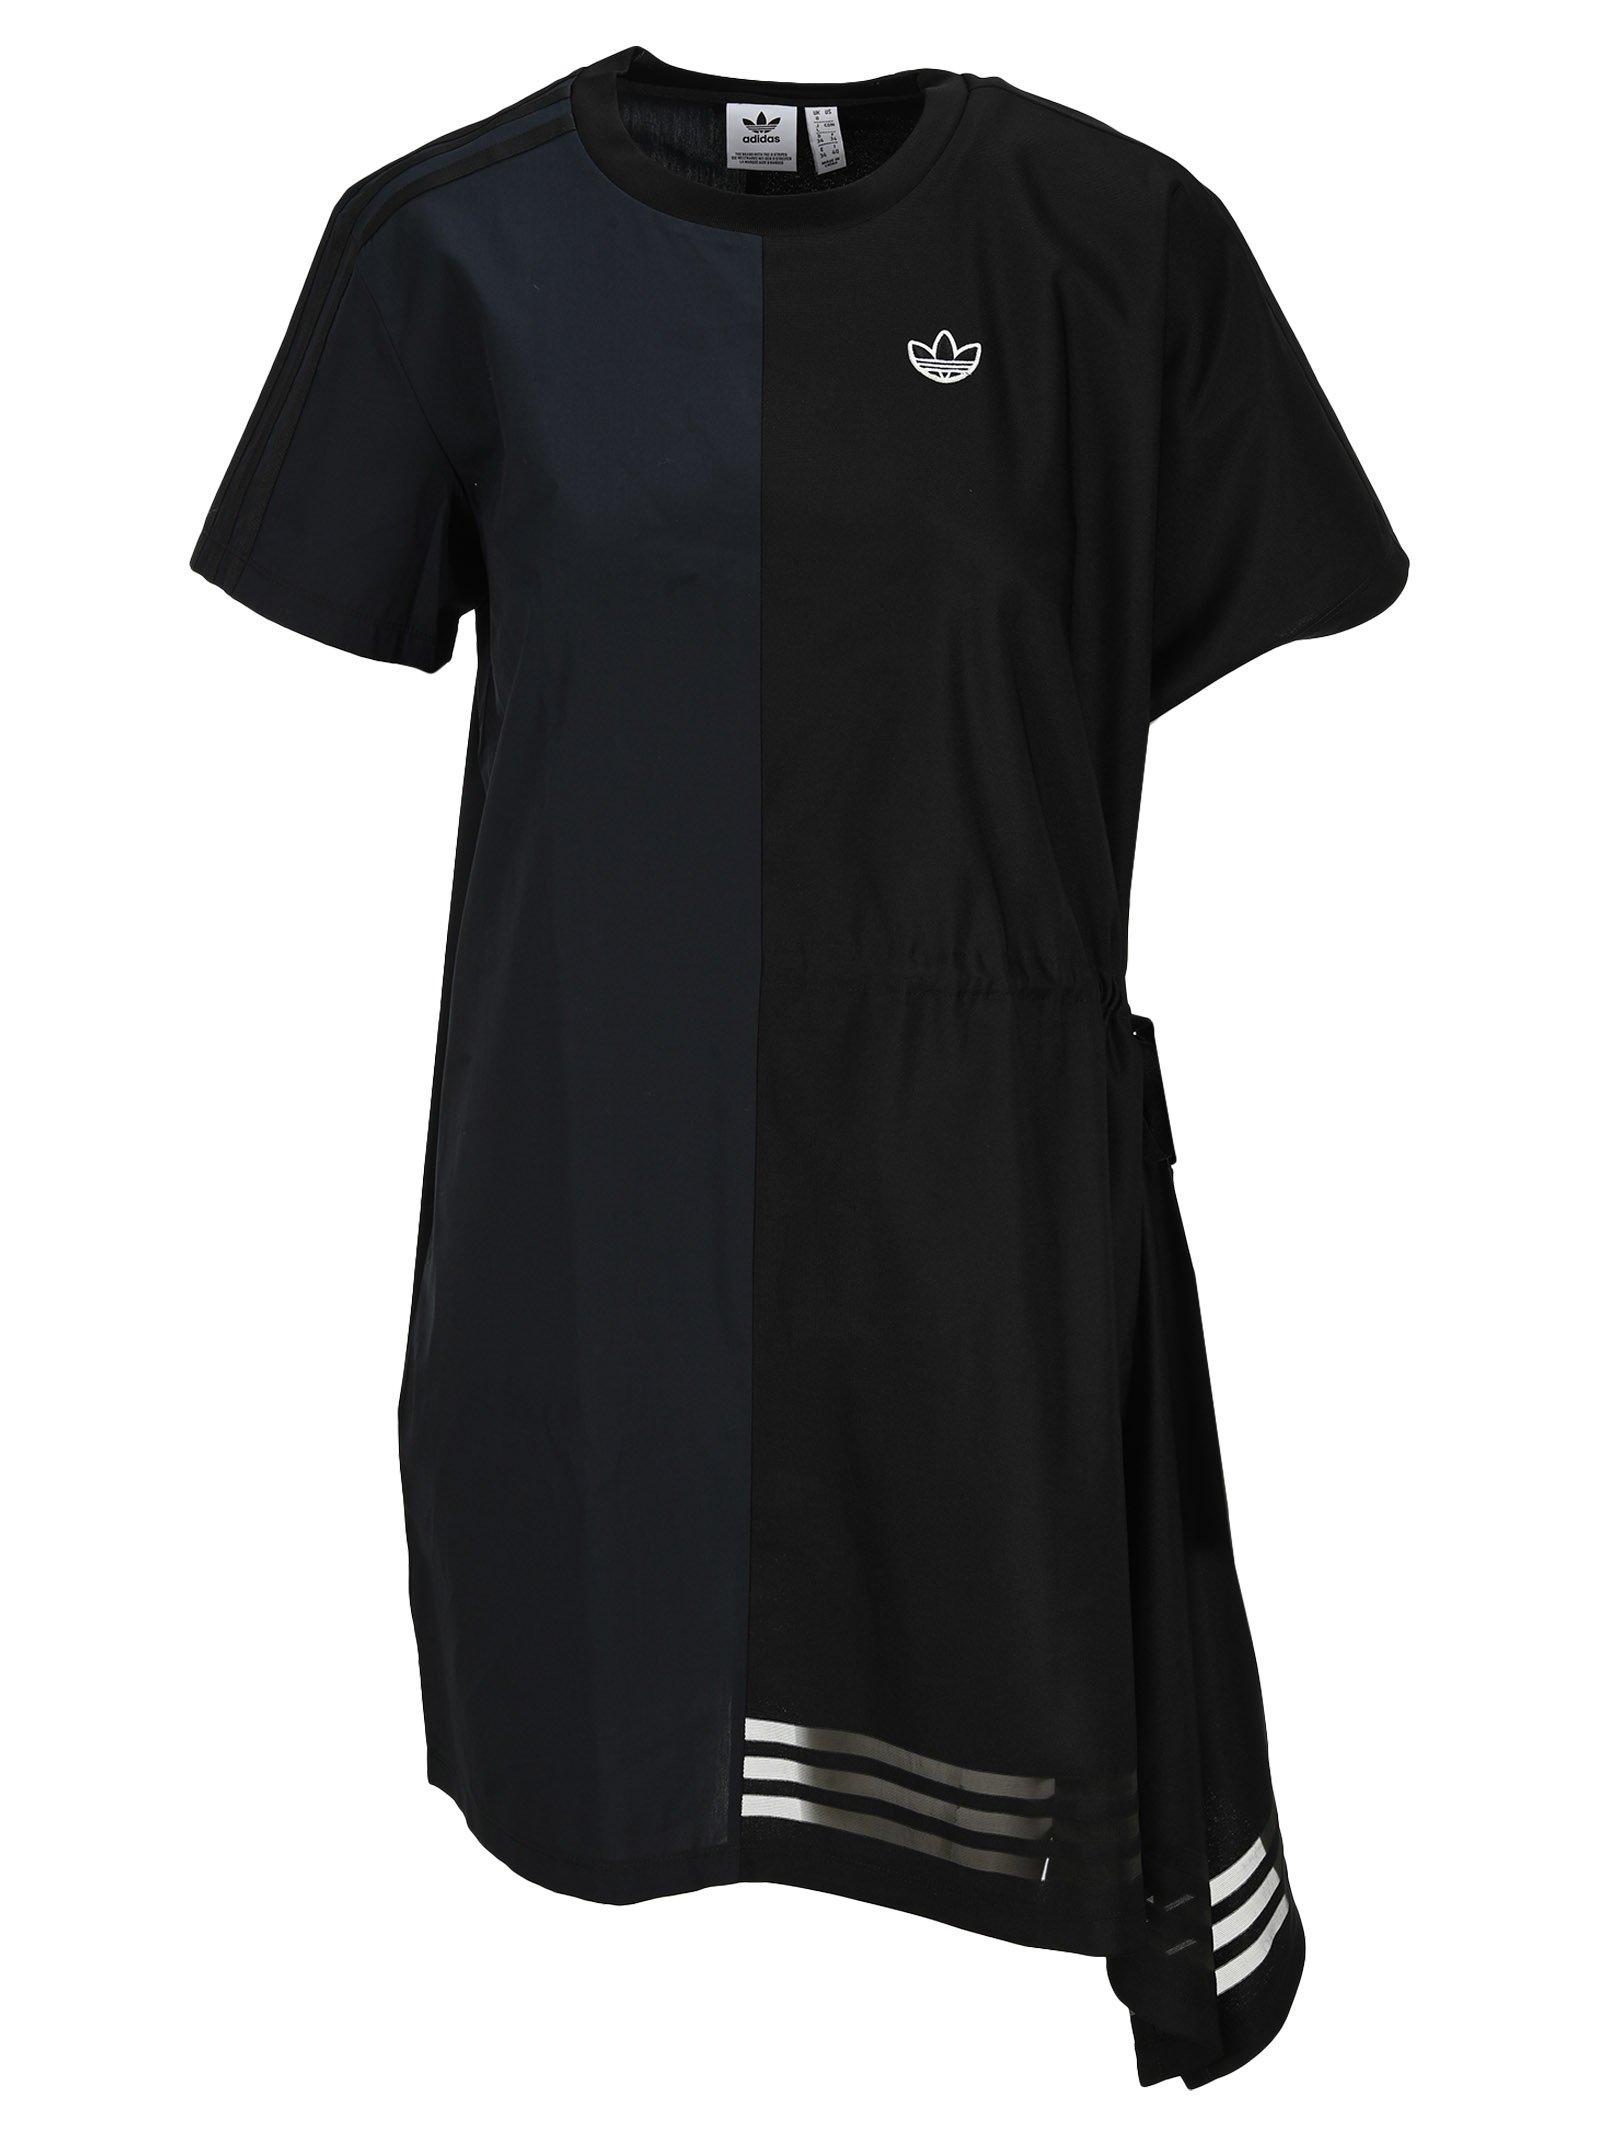 adidas Originals Synthetic Asymmetric T-shirt Dress in Black | Lyst